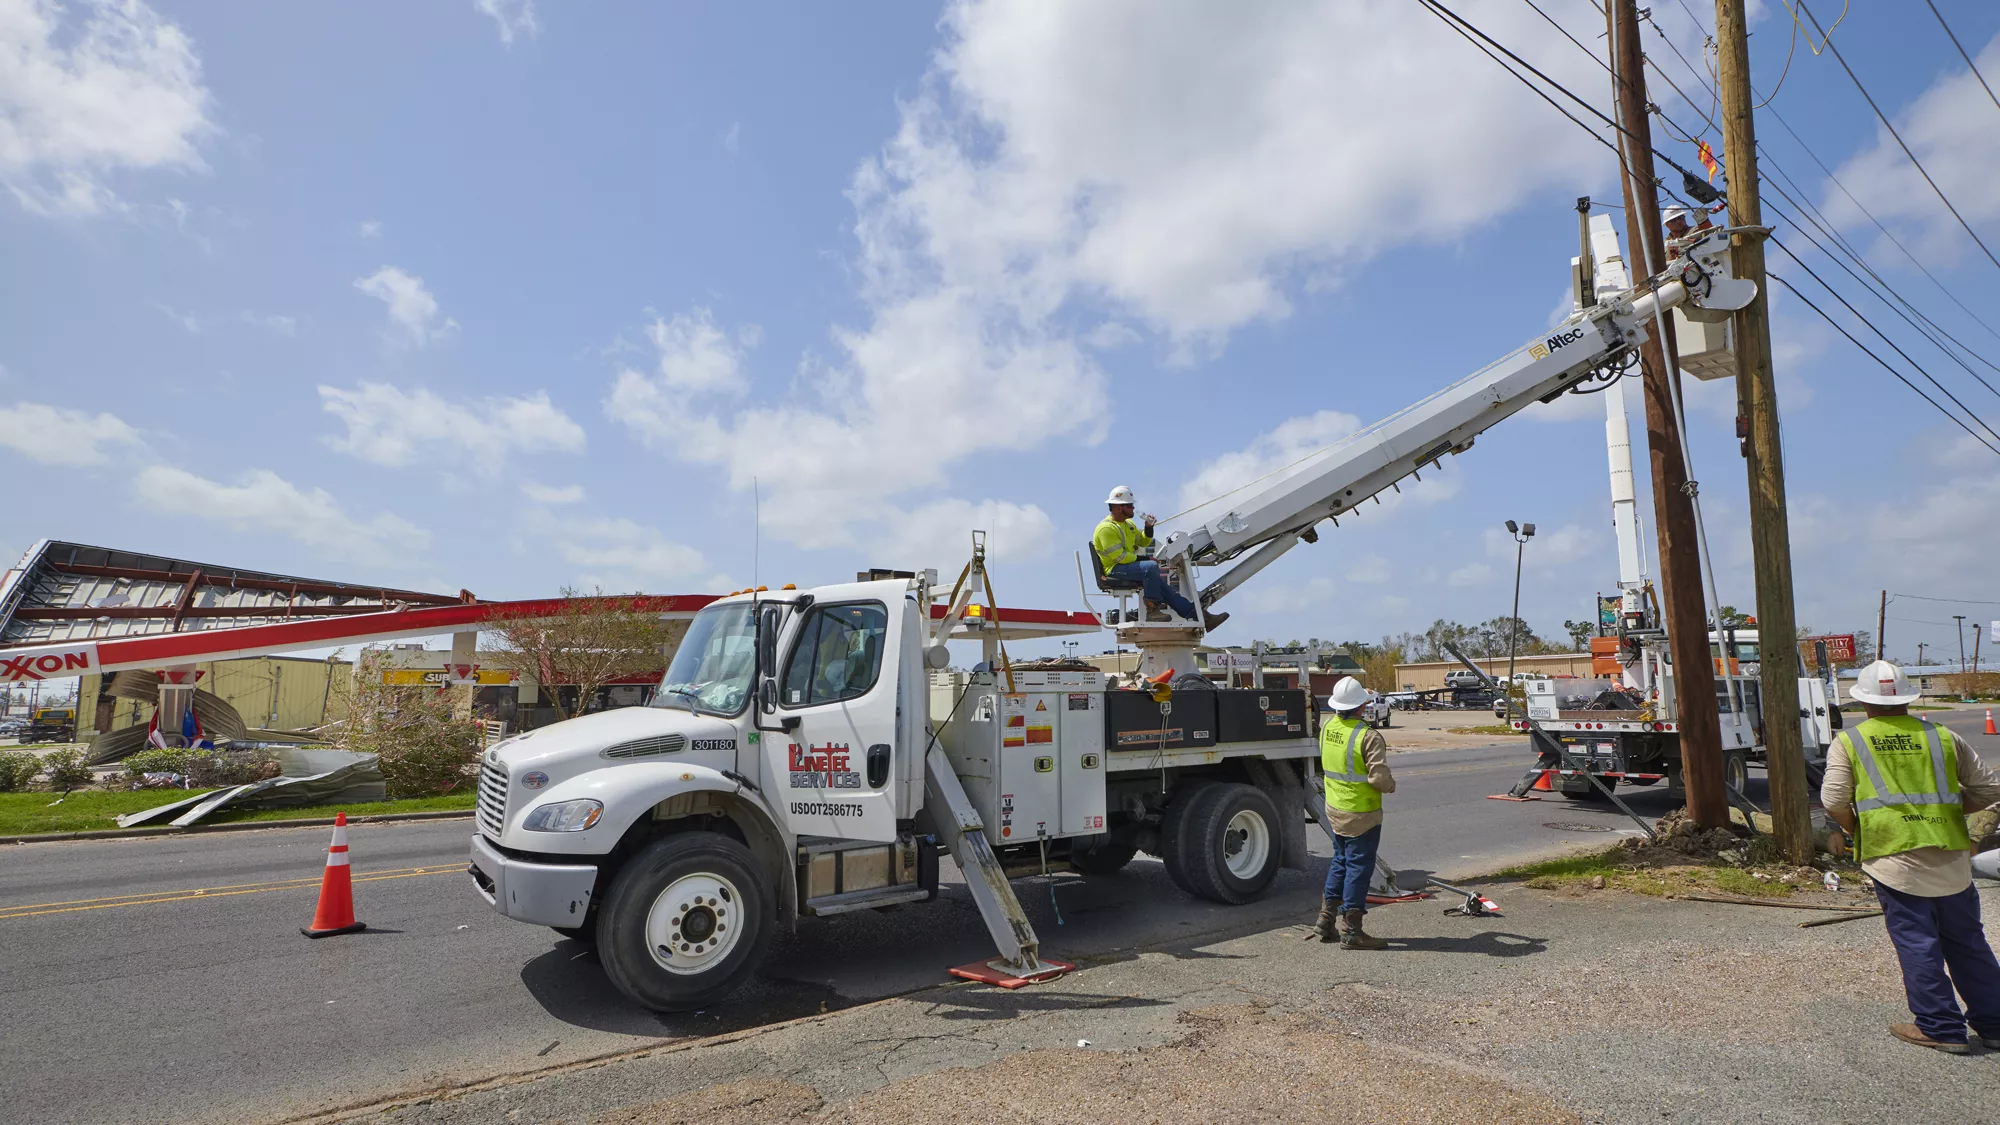 Linetec workers fix poles outdoors.